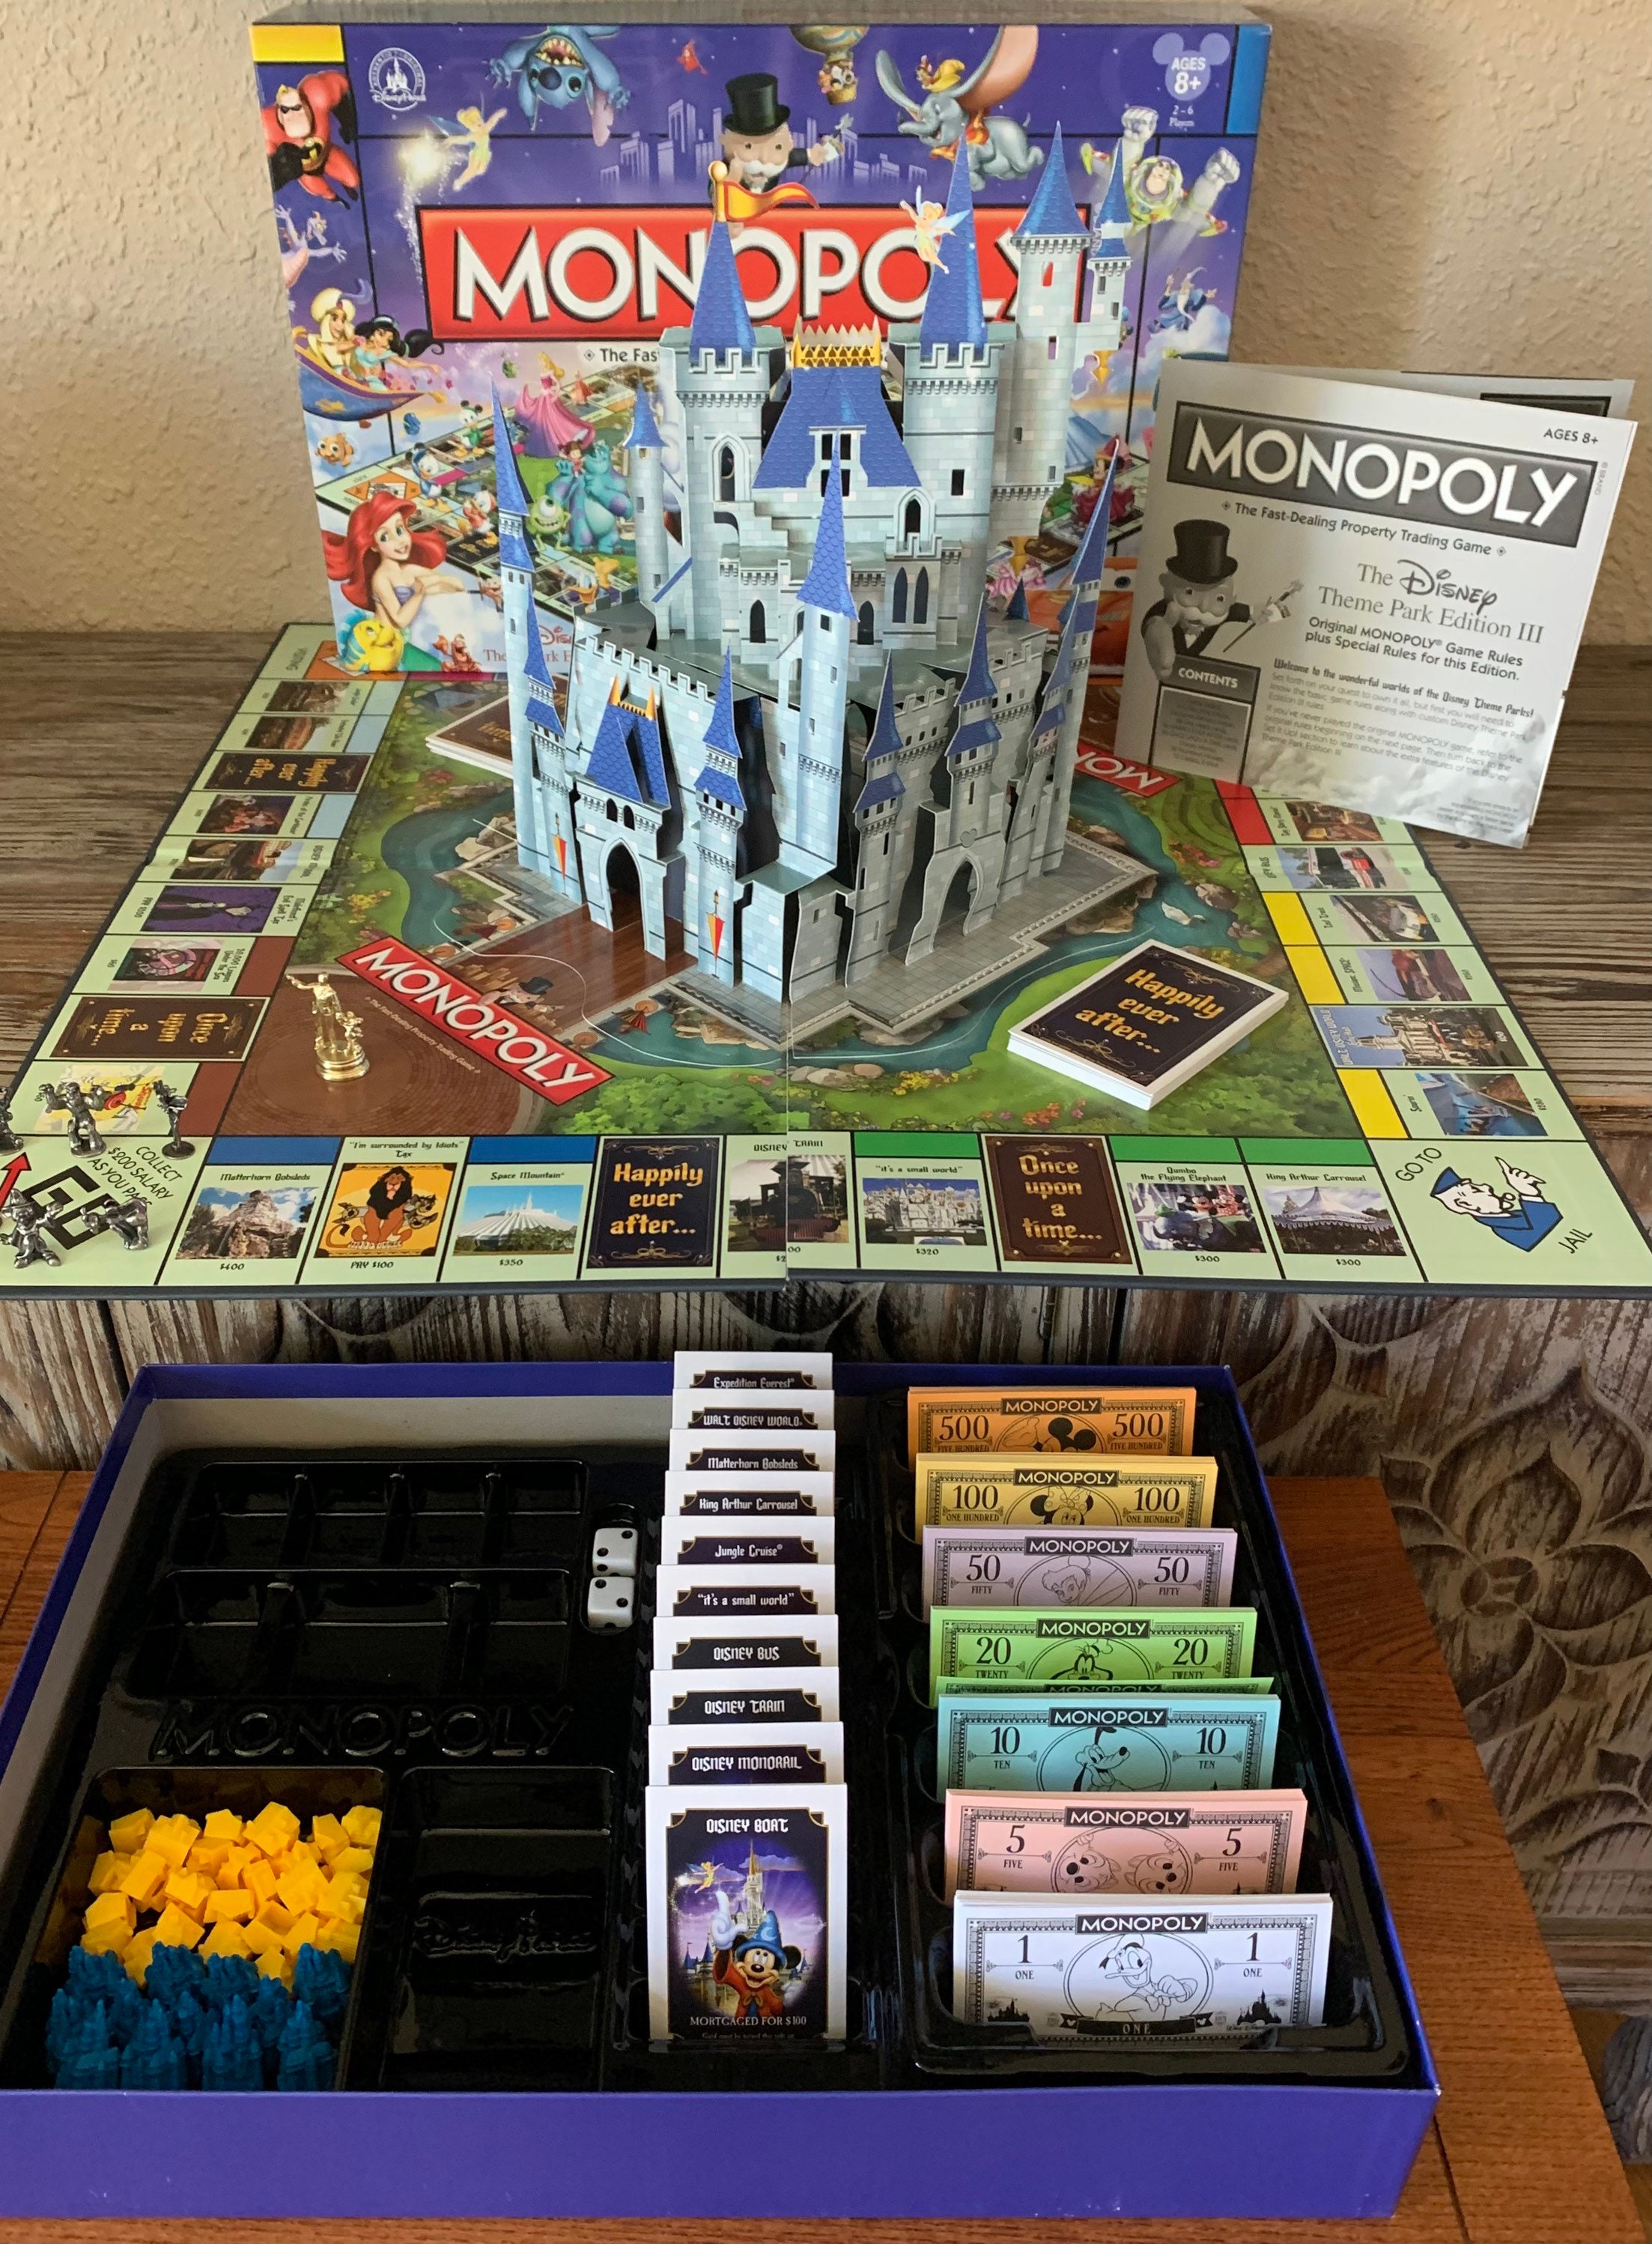 Monopoly Disney Edition